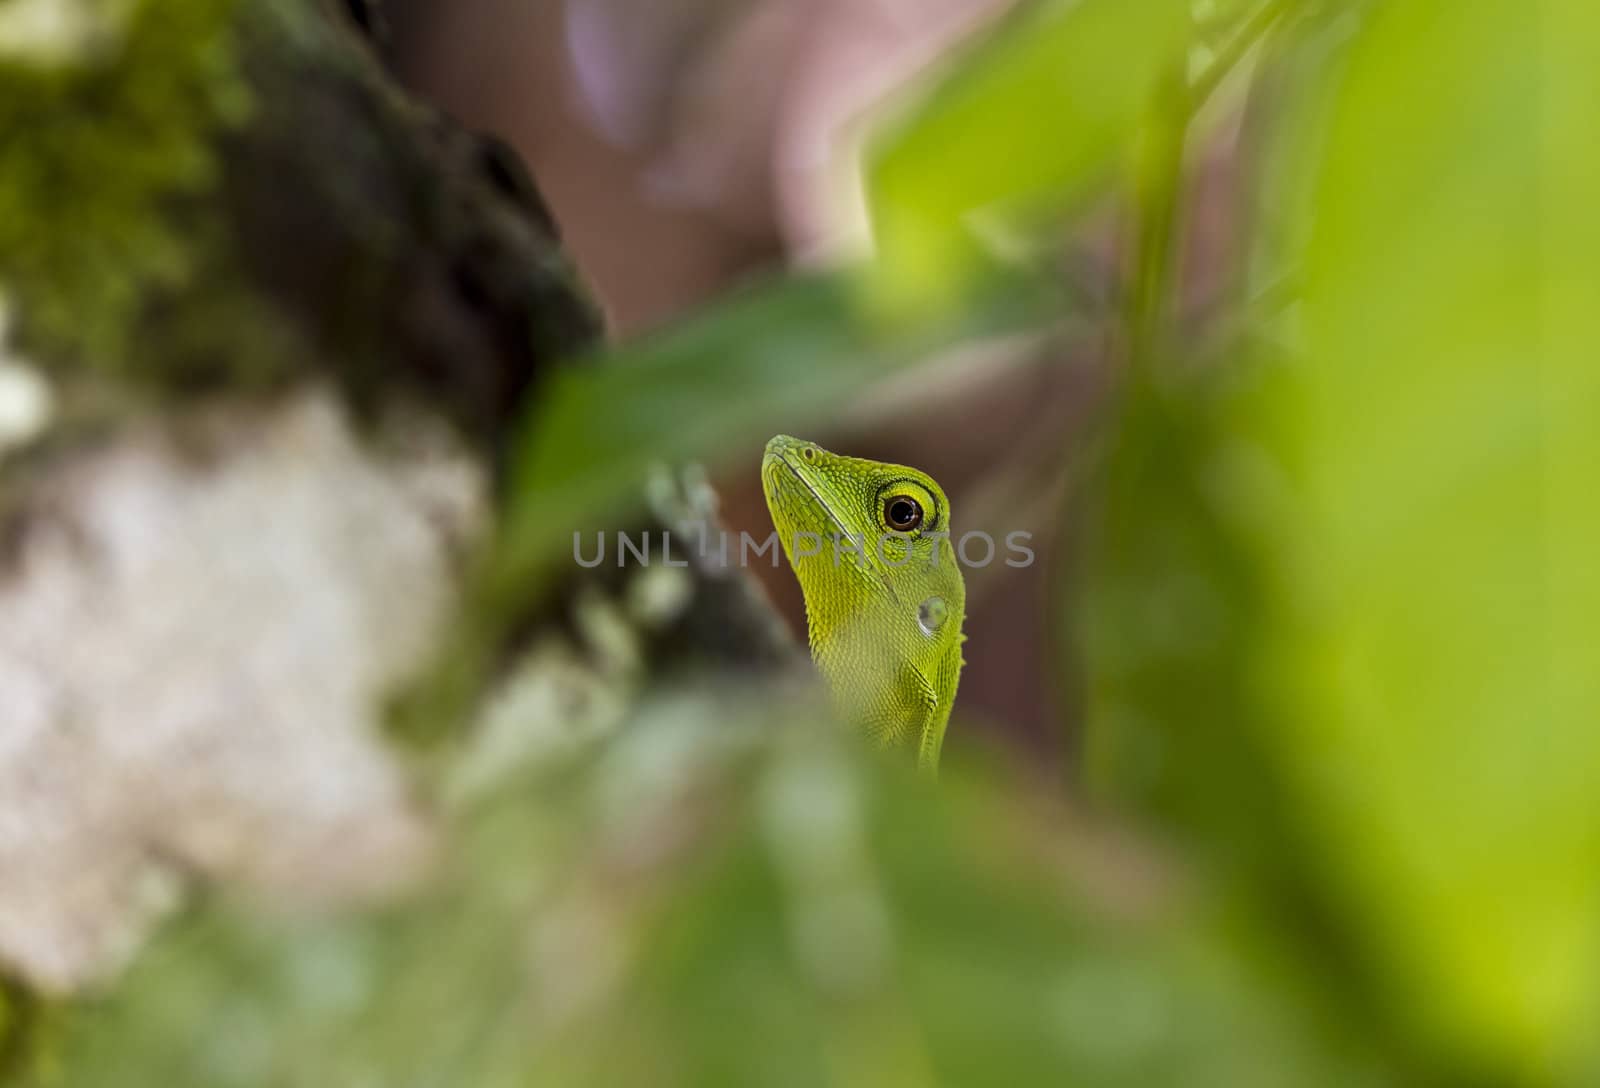 Green lizard peeking through the leaves